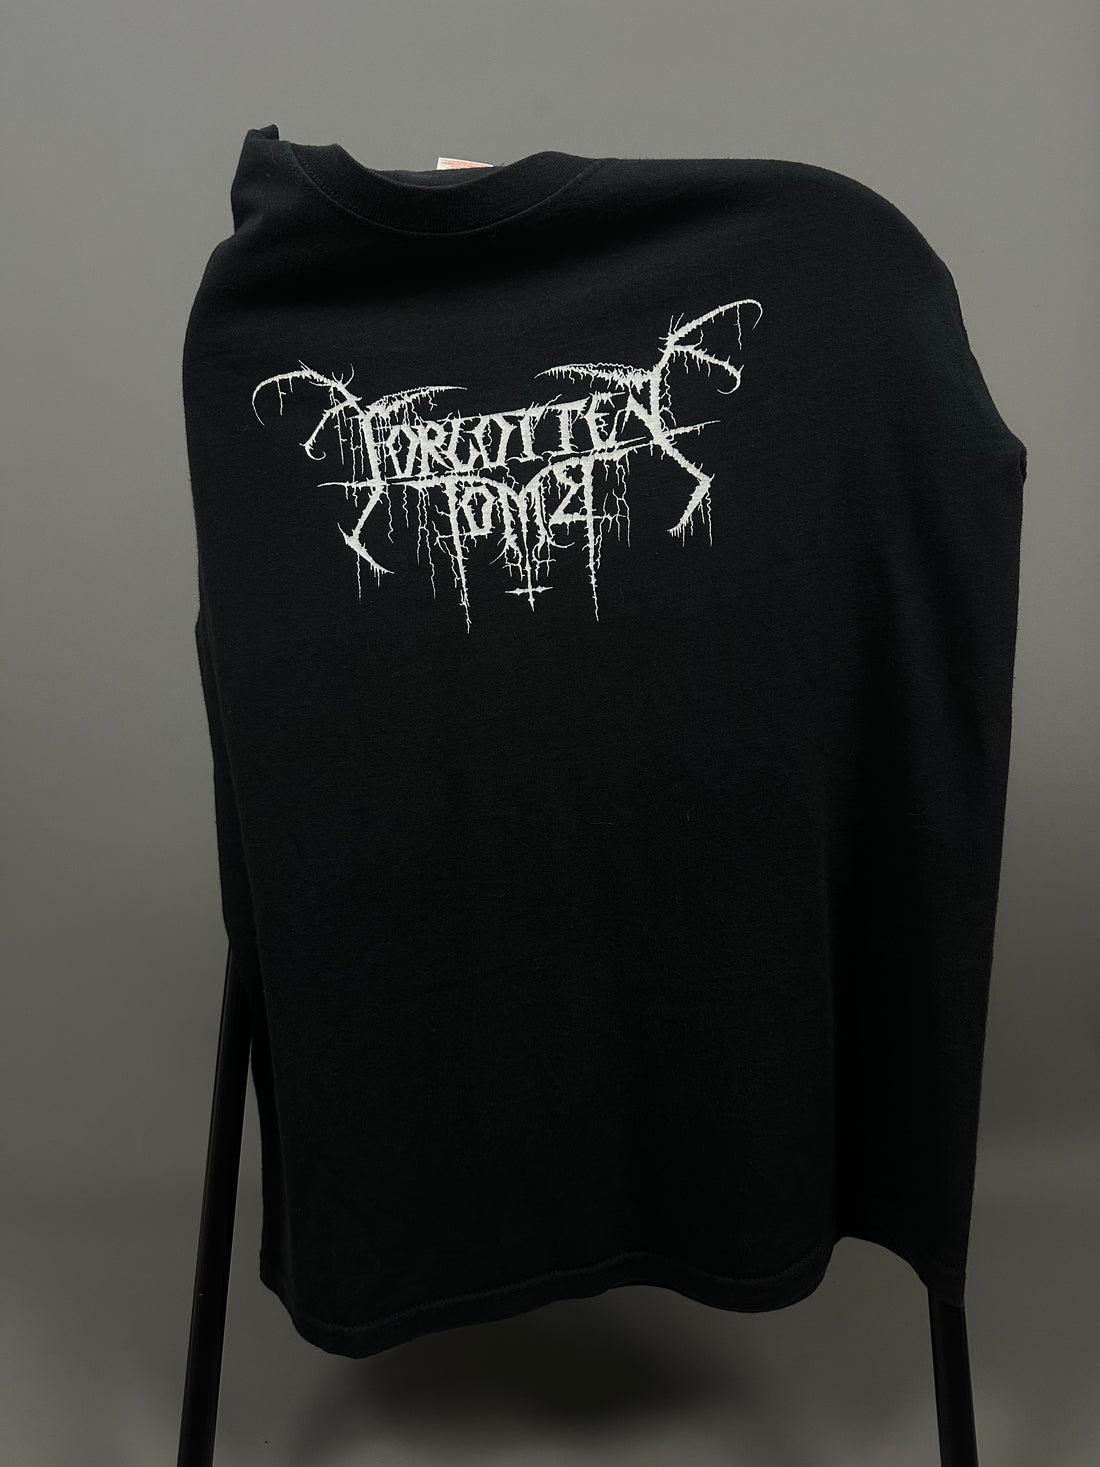 Forgotten Tomb 2000s European Black Metal Vintage T-Shirt